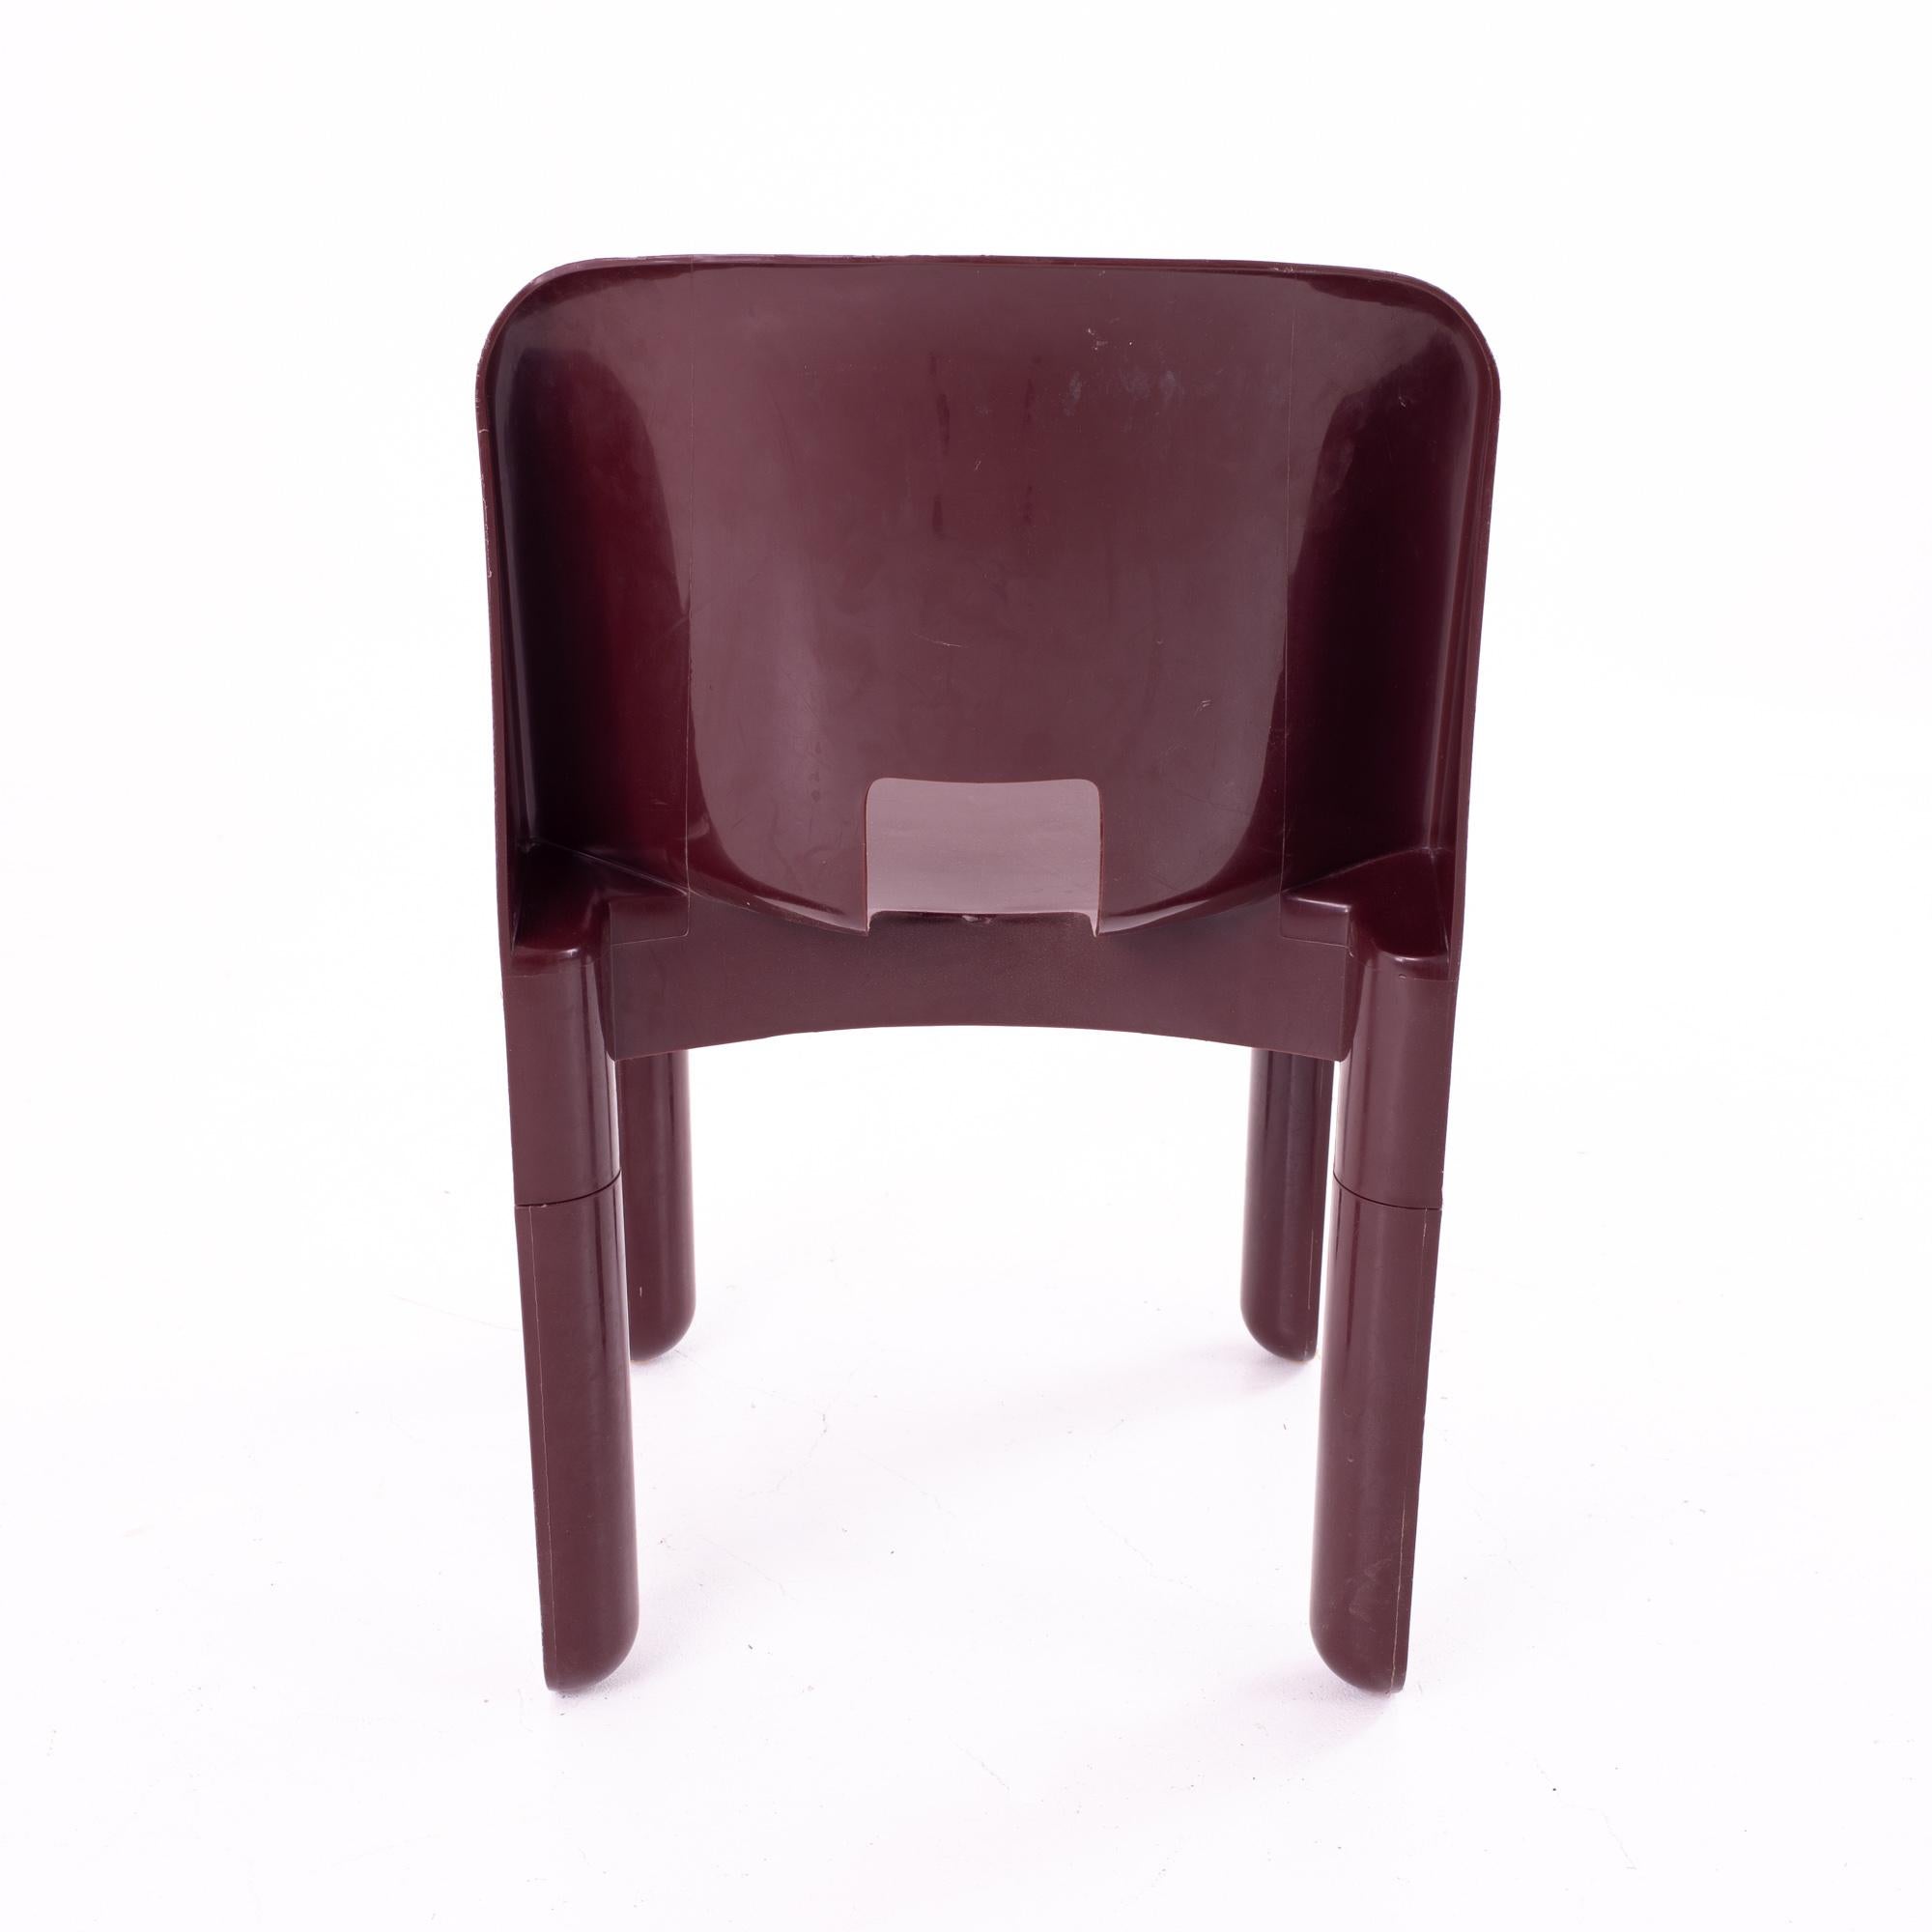 Joe Colombo Kartell Mid Century Plastic Chairs, Pair 1